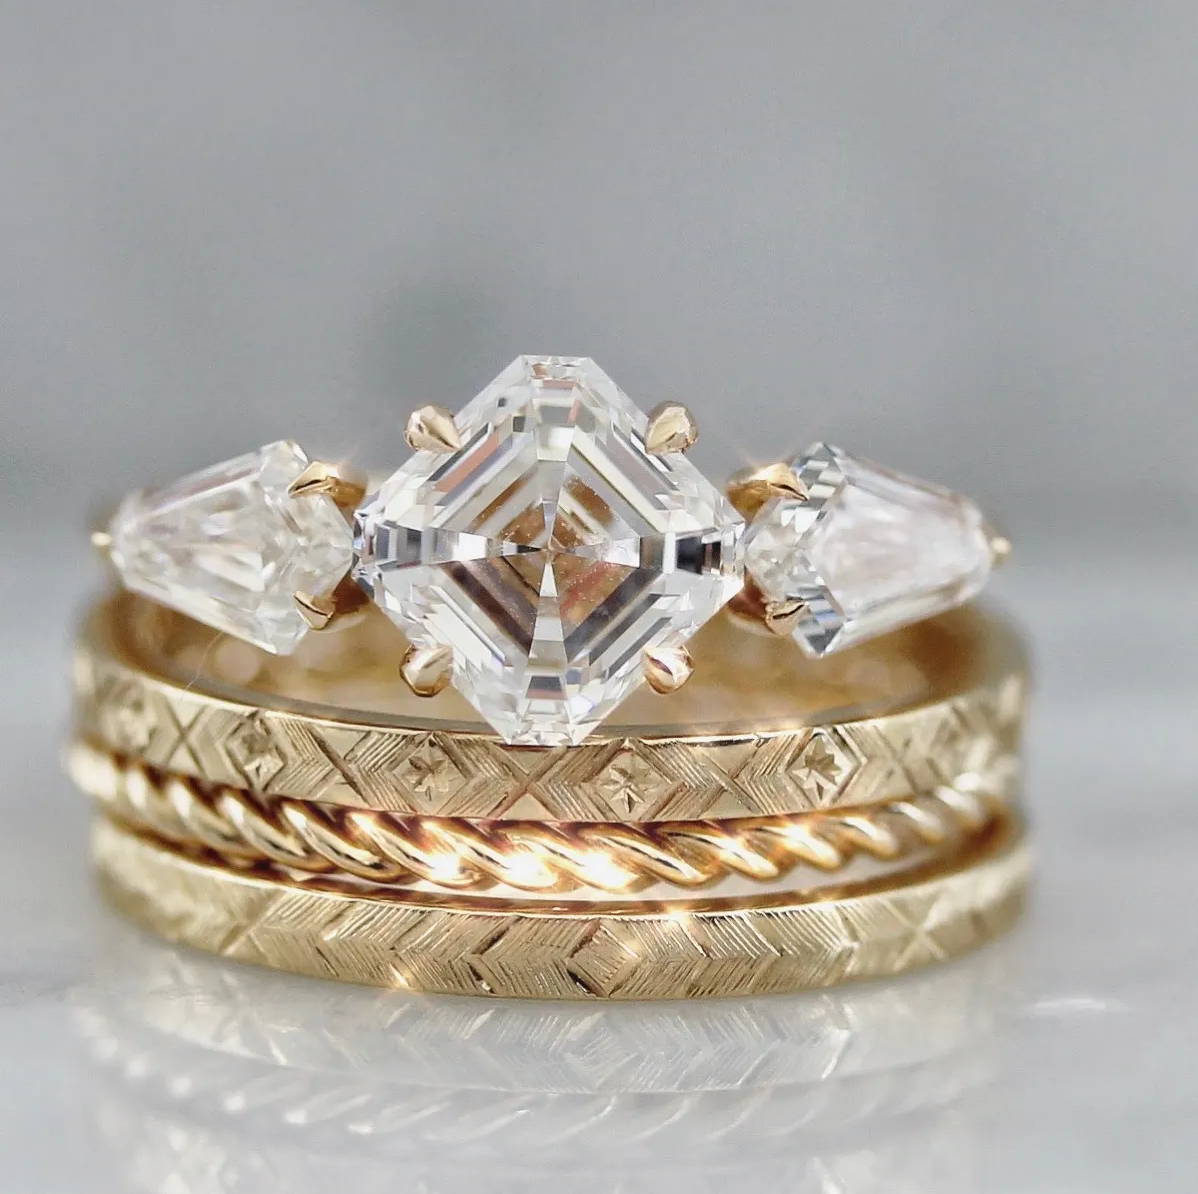 Asscher Cut Diamond Ring with kite diamond sides